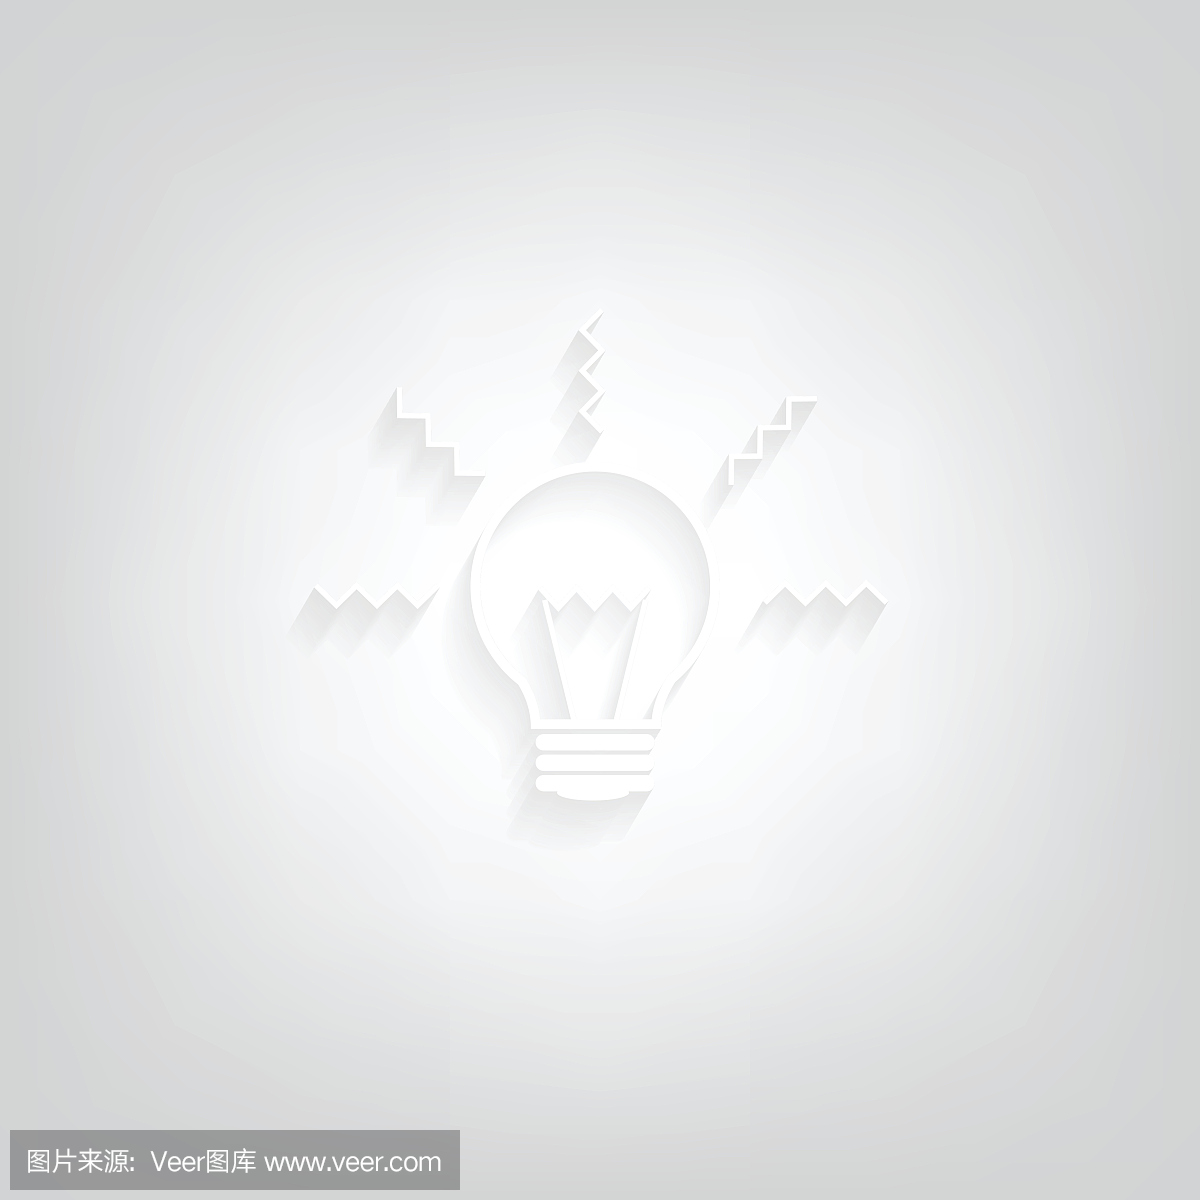 Lamp line icon on white background. Vector illu